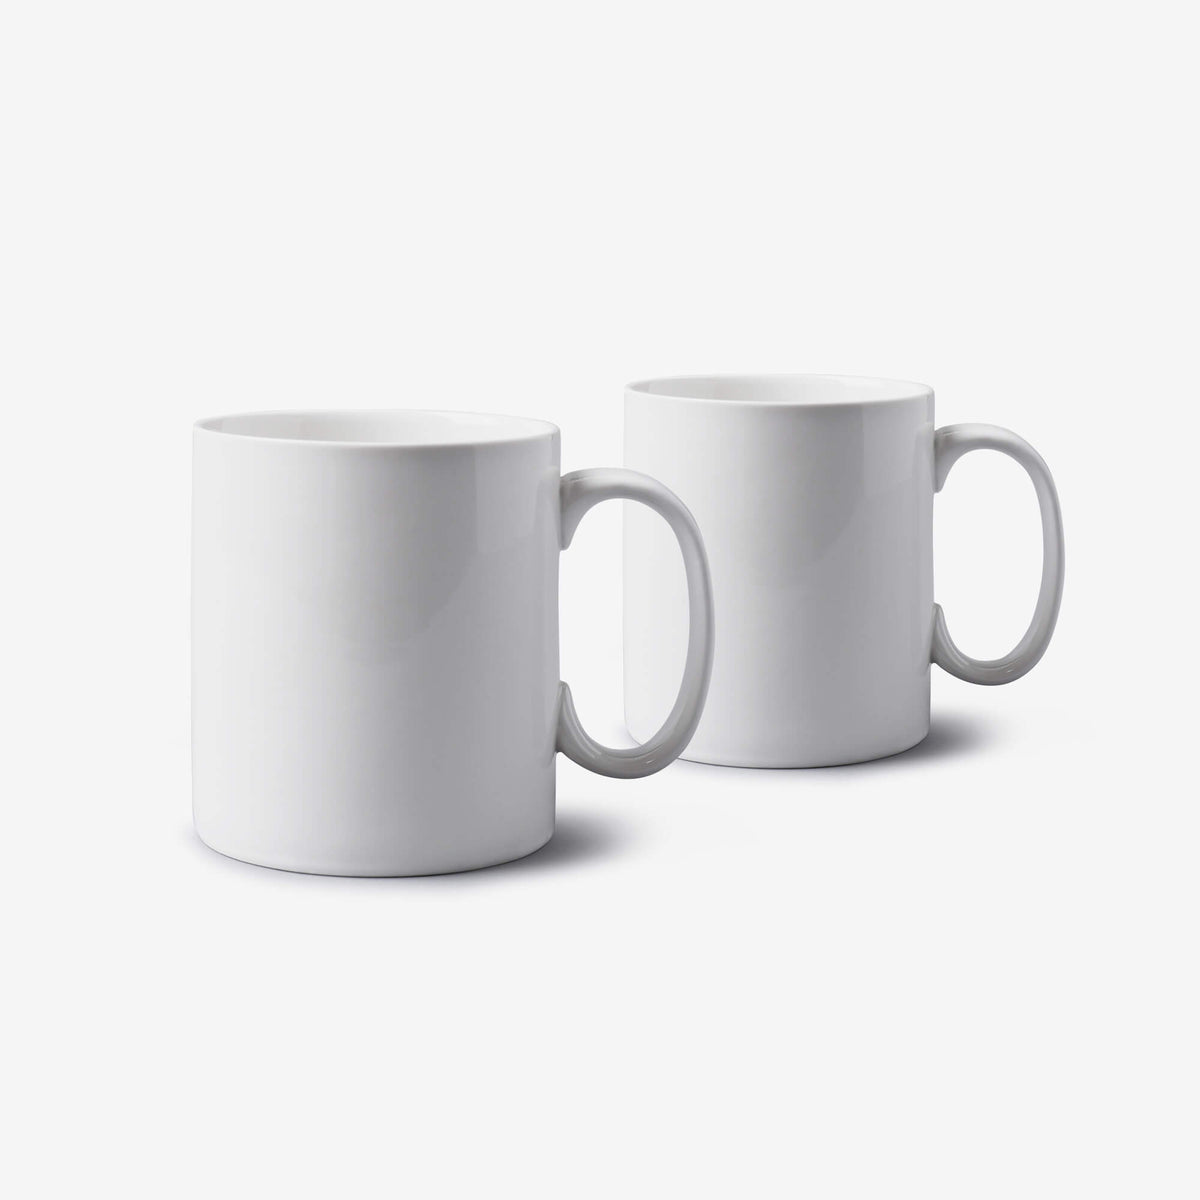 Porcelain Extra Large Original Mug, 1.2 Pint, Set of 2